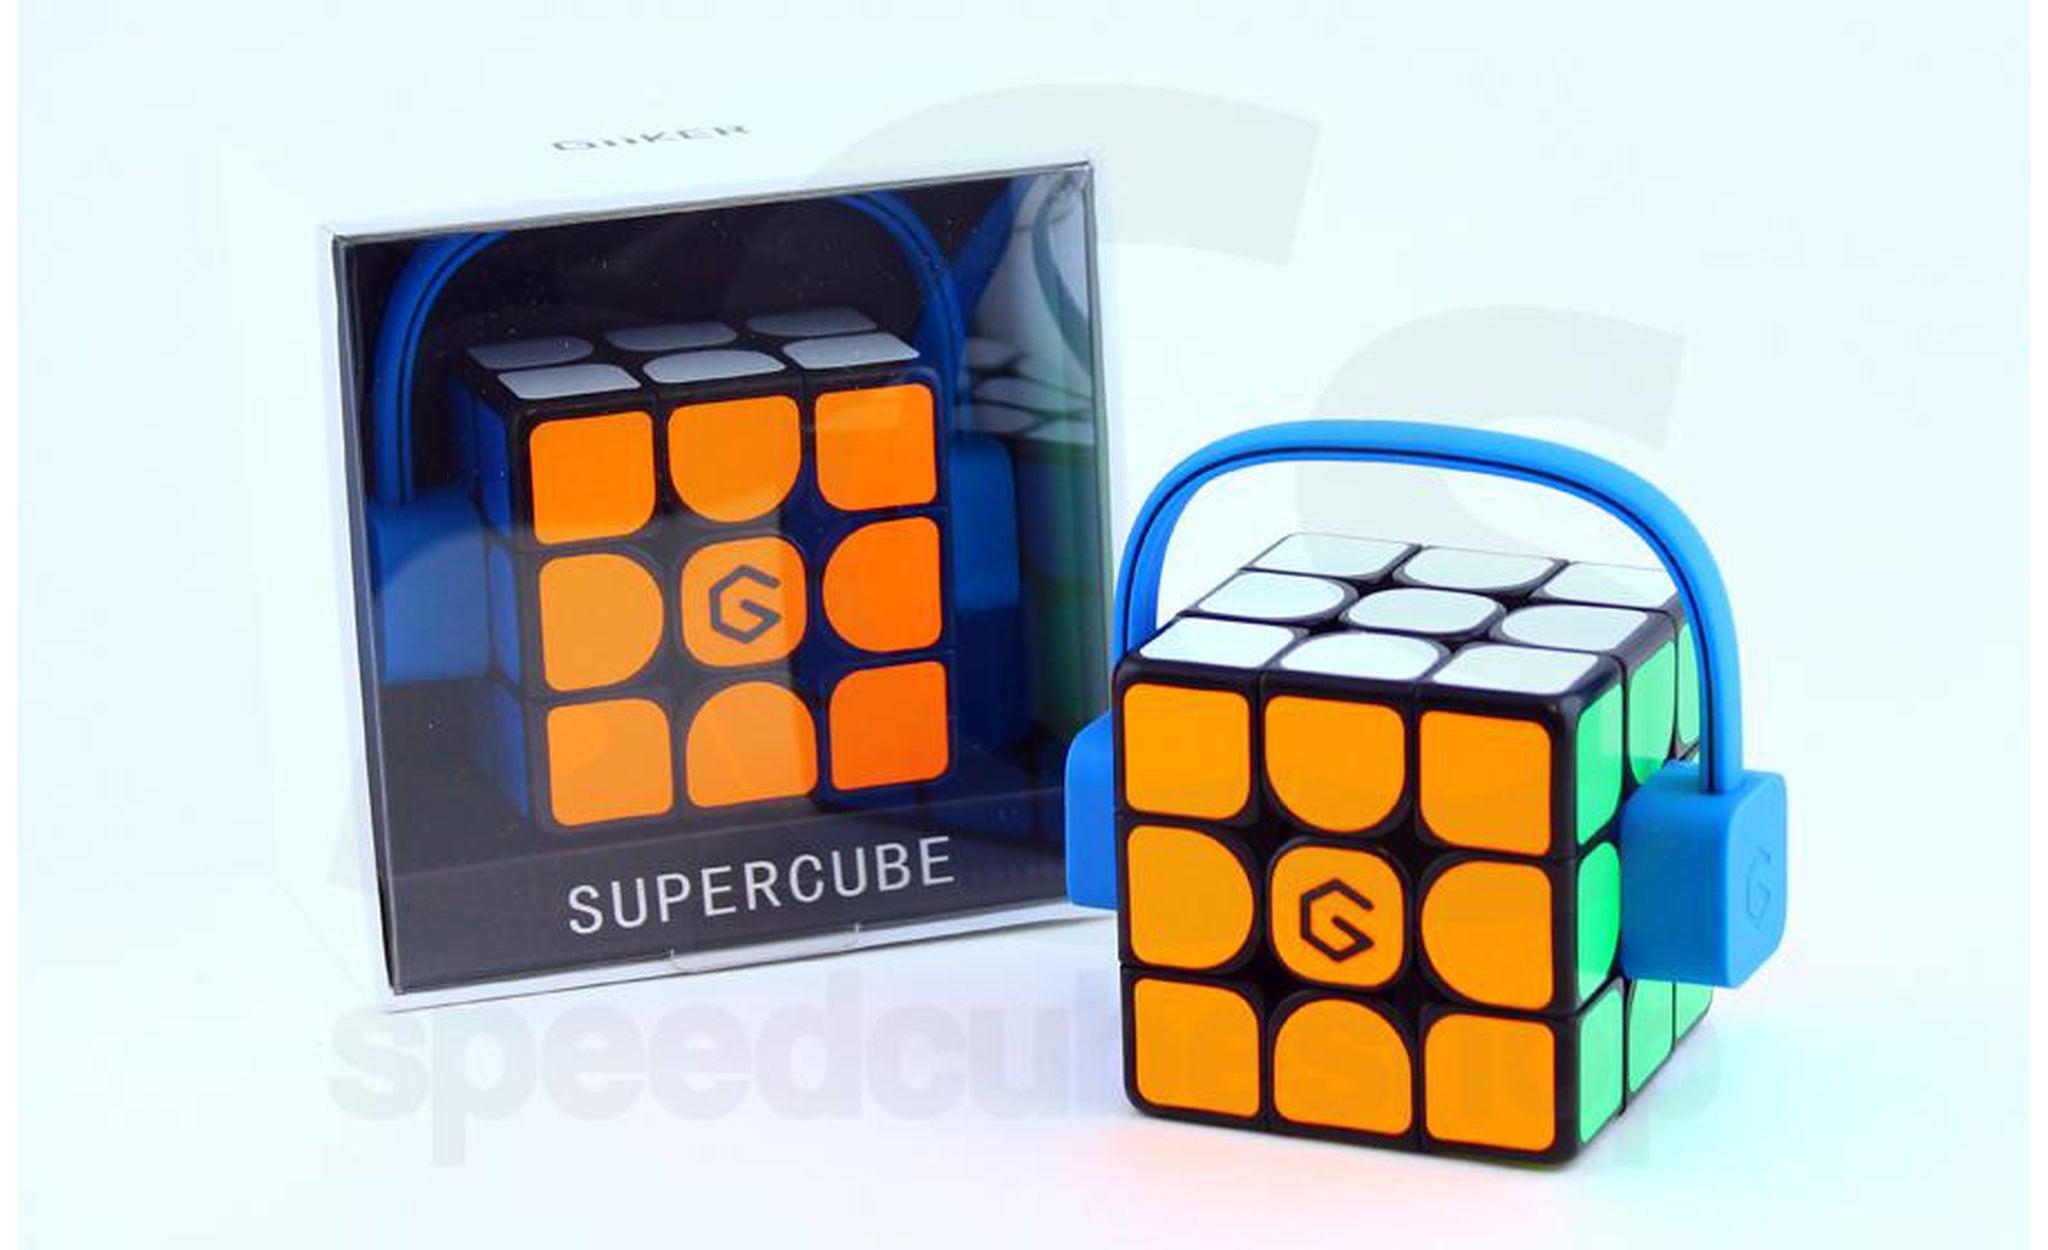 Xiaomi giiker smart four. Кубик Рубика Giiker super Cube i3. Таймер для кубика Рубика. Кубик Рубика Xiaomi Giiker m3 3x3x3 (Сяоми Гикер м3 3х3х3). Кубик Рубика Сяоми Гикер i3s.